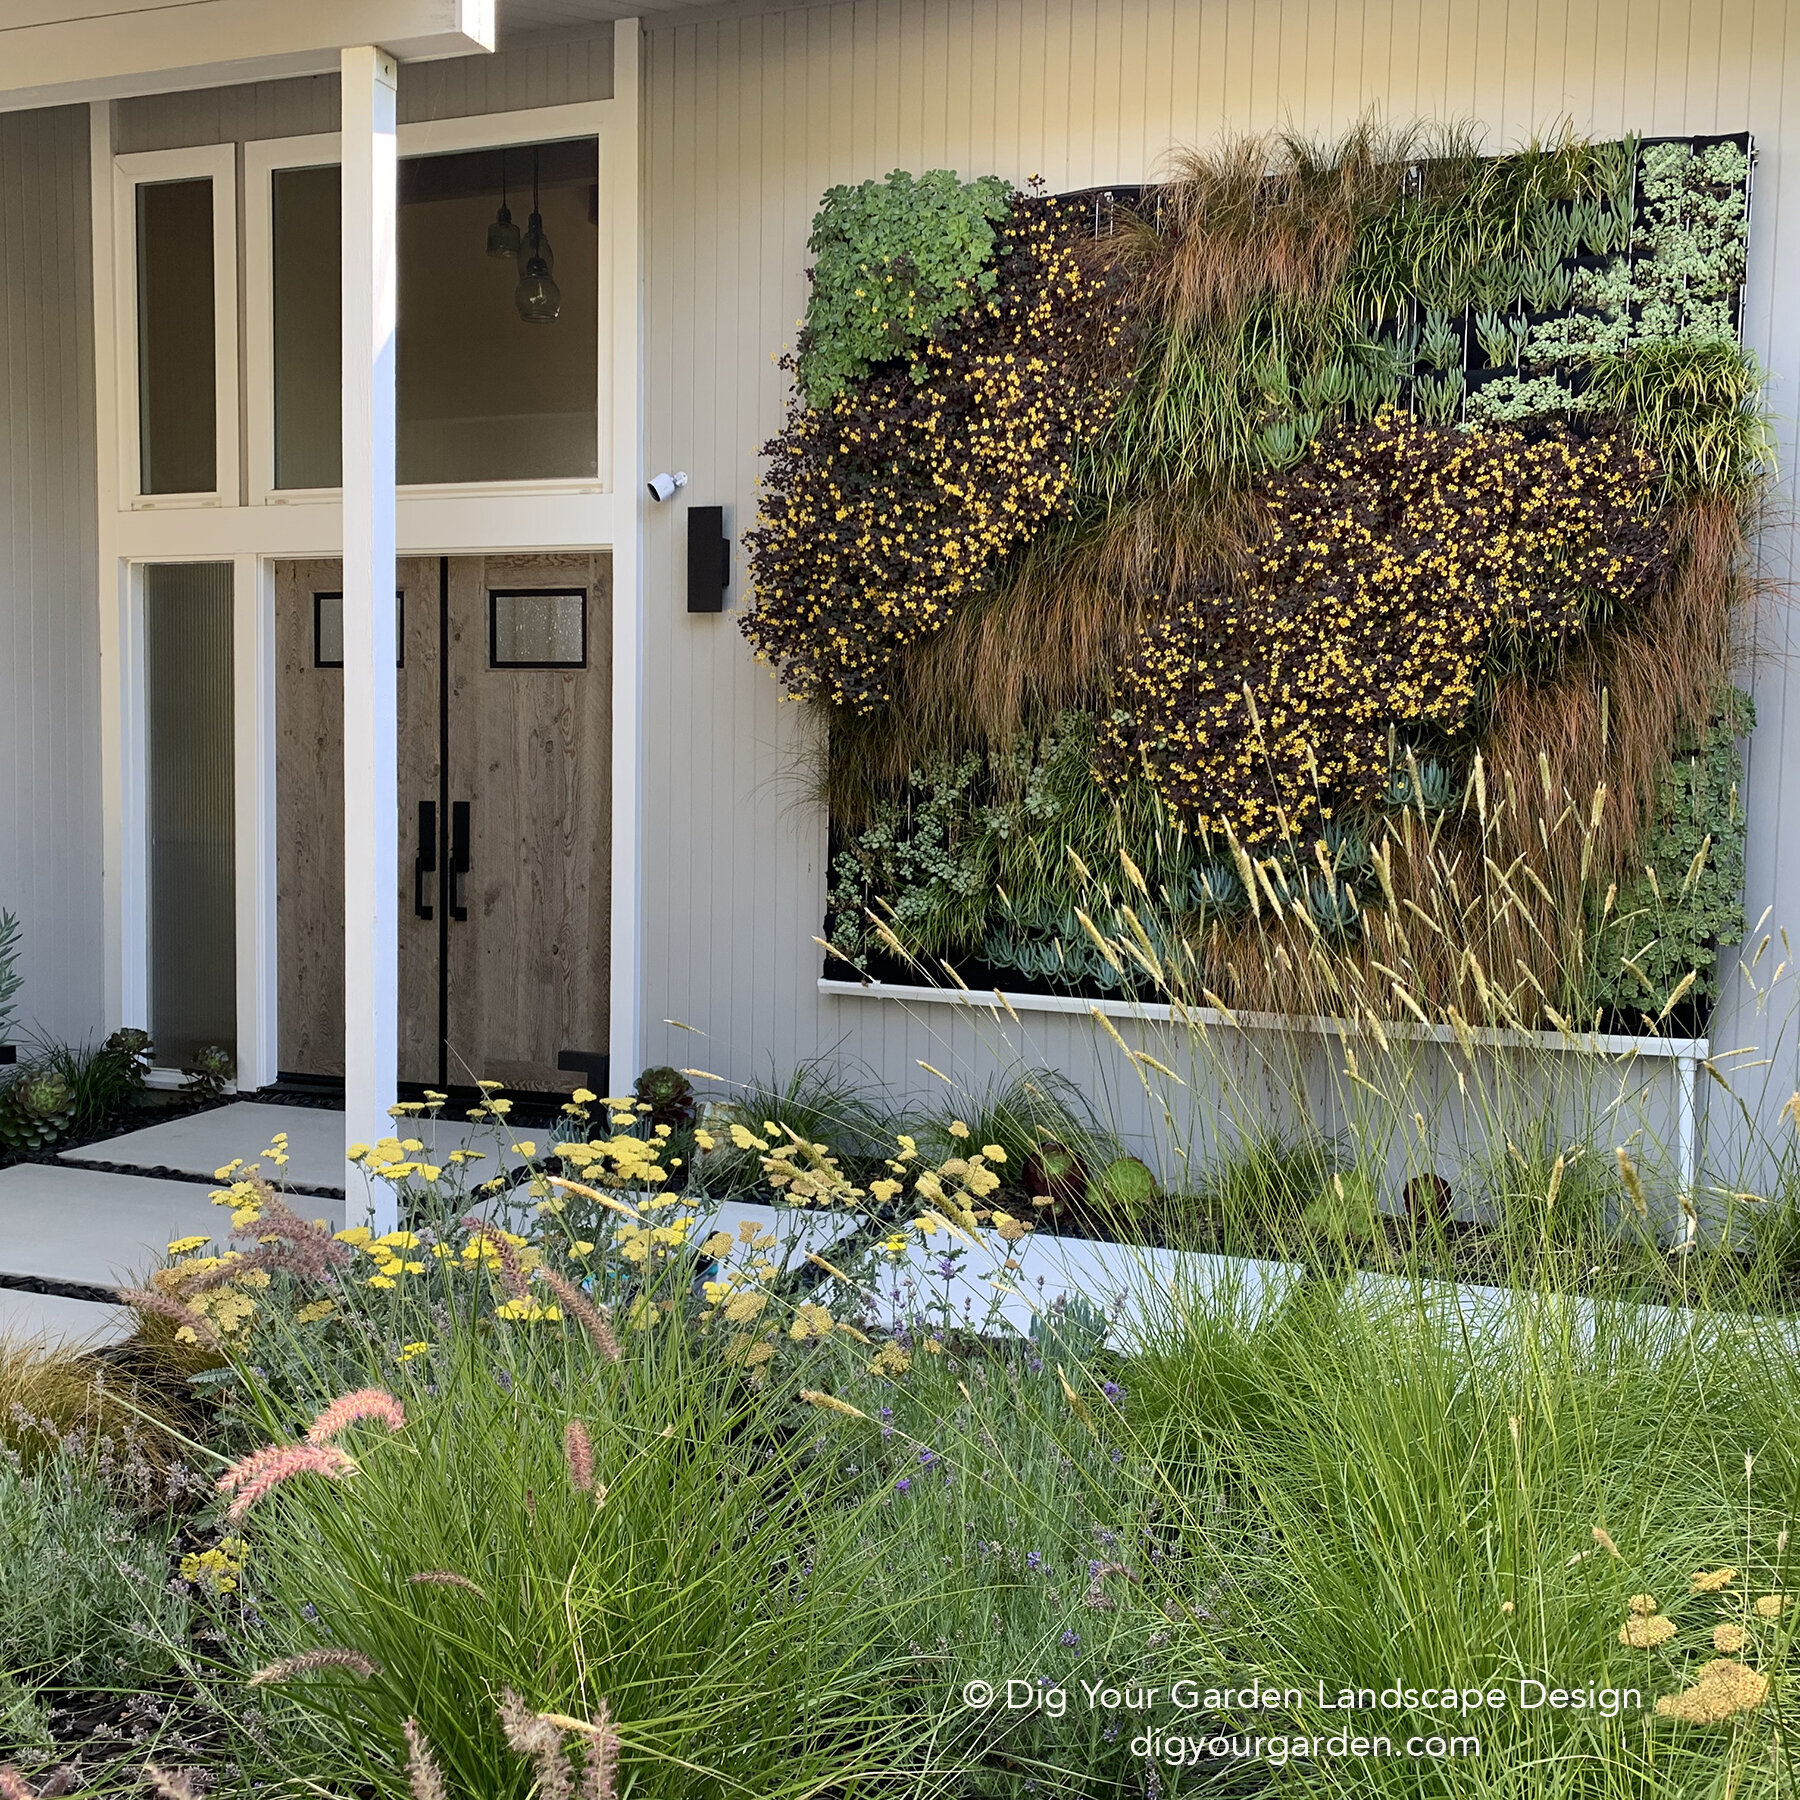 Dig Your Garden Living-wall-grasses-succulents-front-entrance-modern-landscape-design-sausalito.jpg